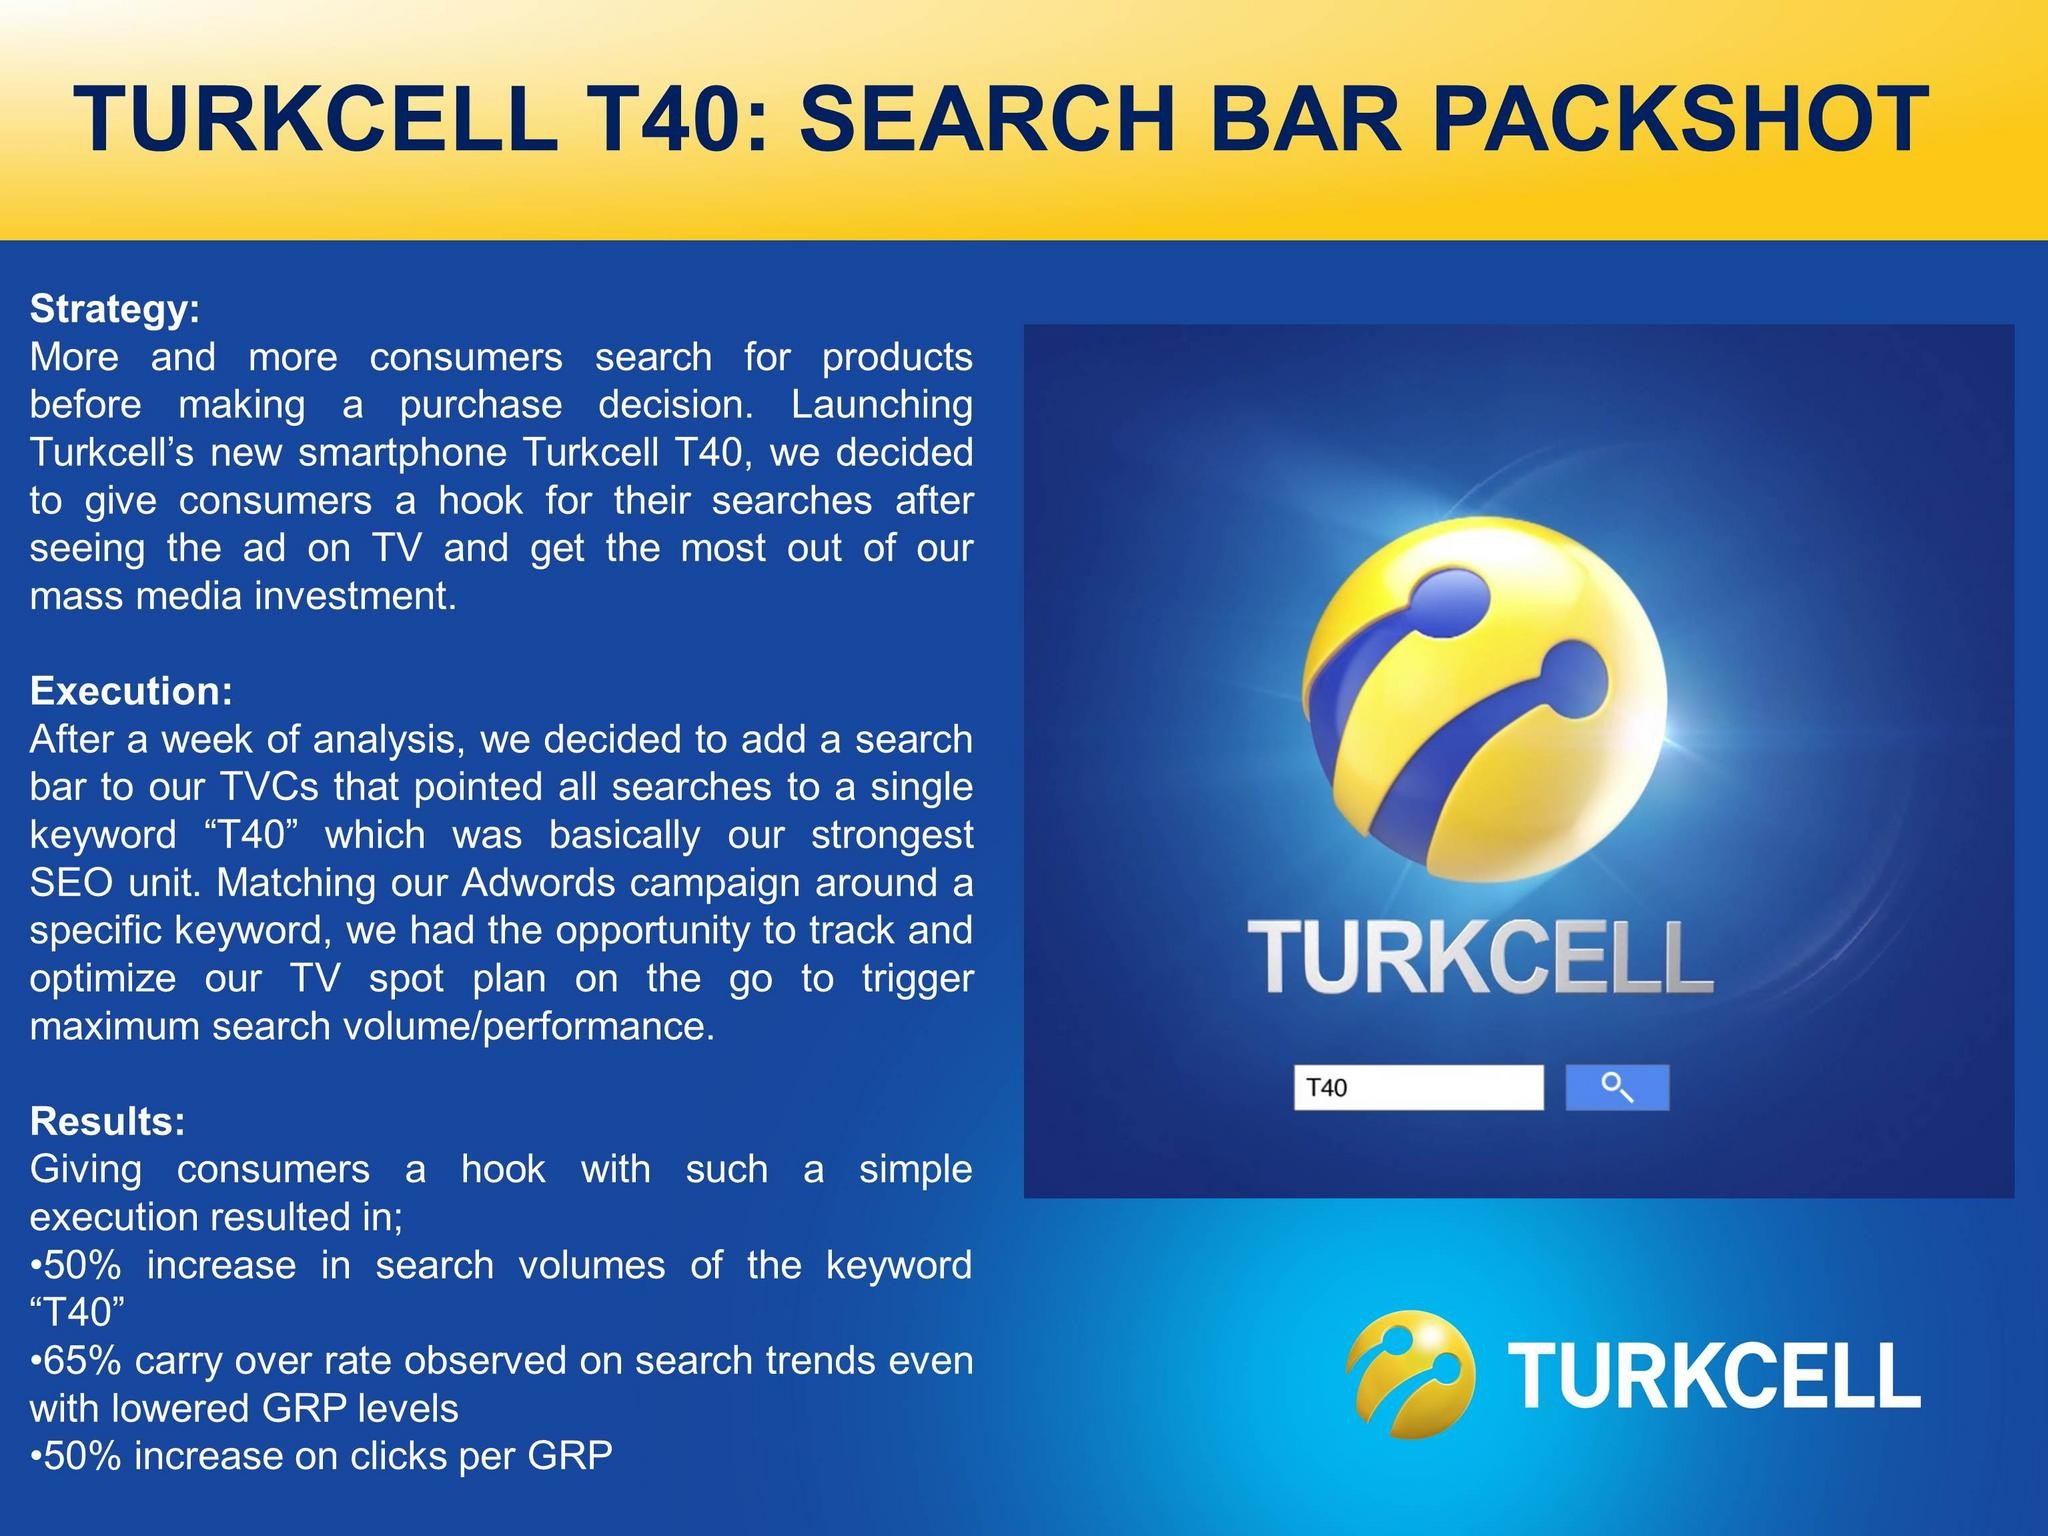 TURKCELL T40: SEARCH BAR PACKSHOT